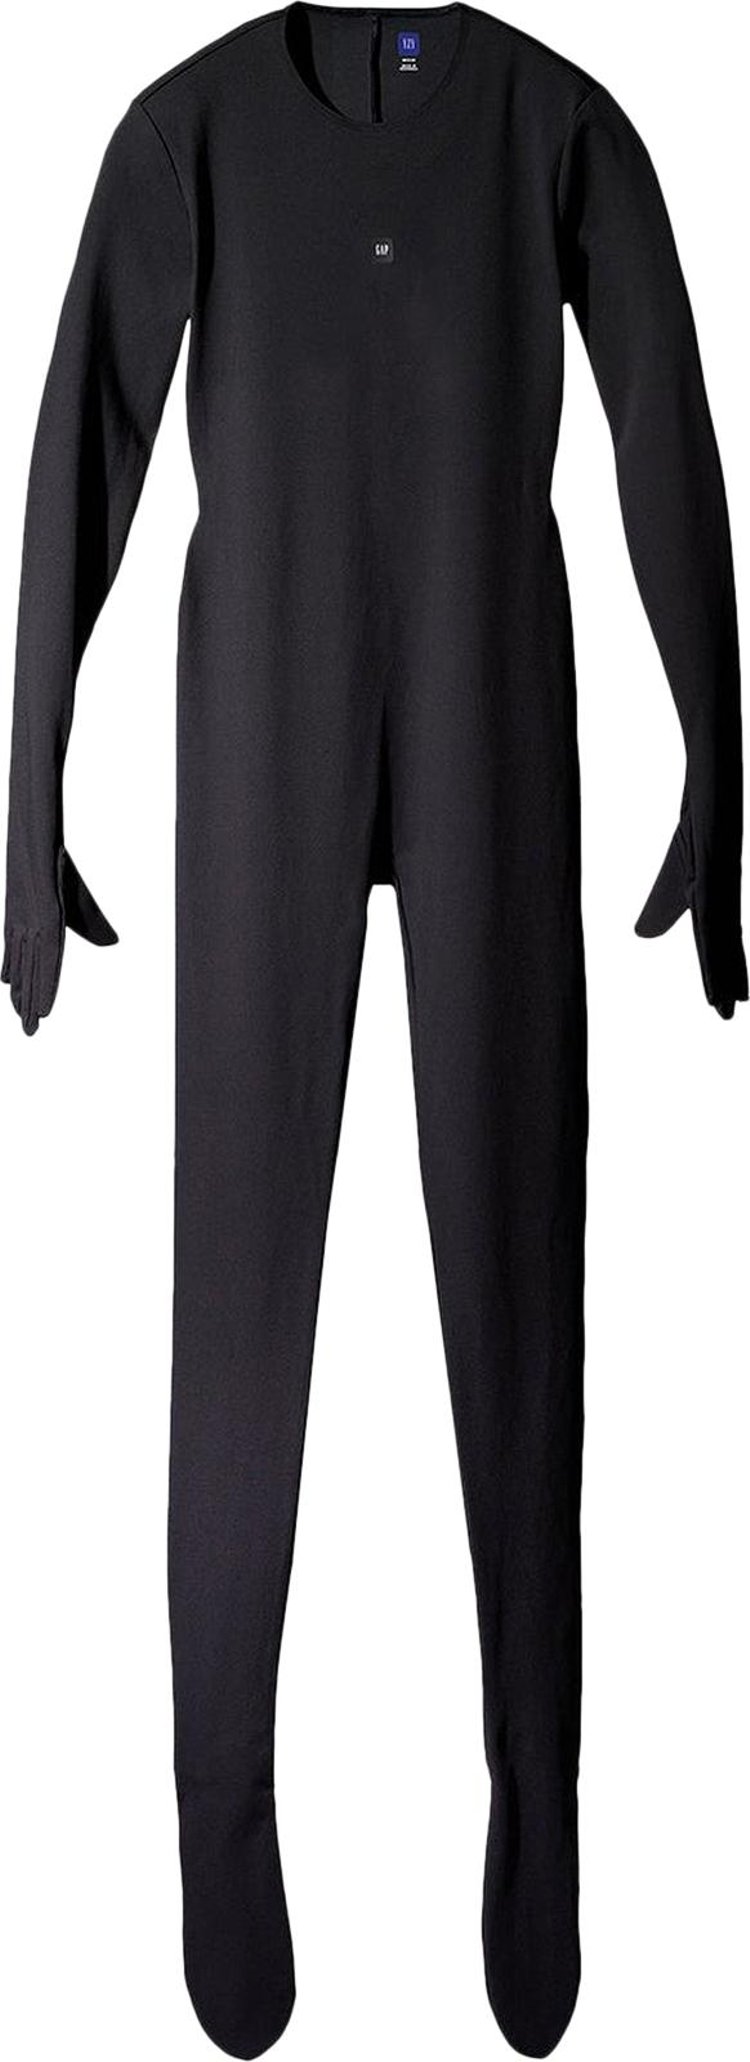 Yeezy Gap Engineered by Balenciaga Long-Sleeve Bodysuit 'Black'